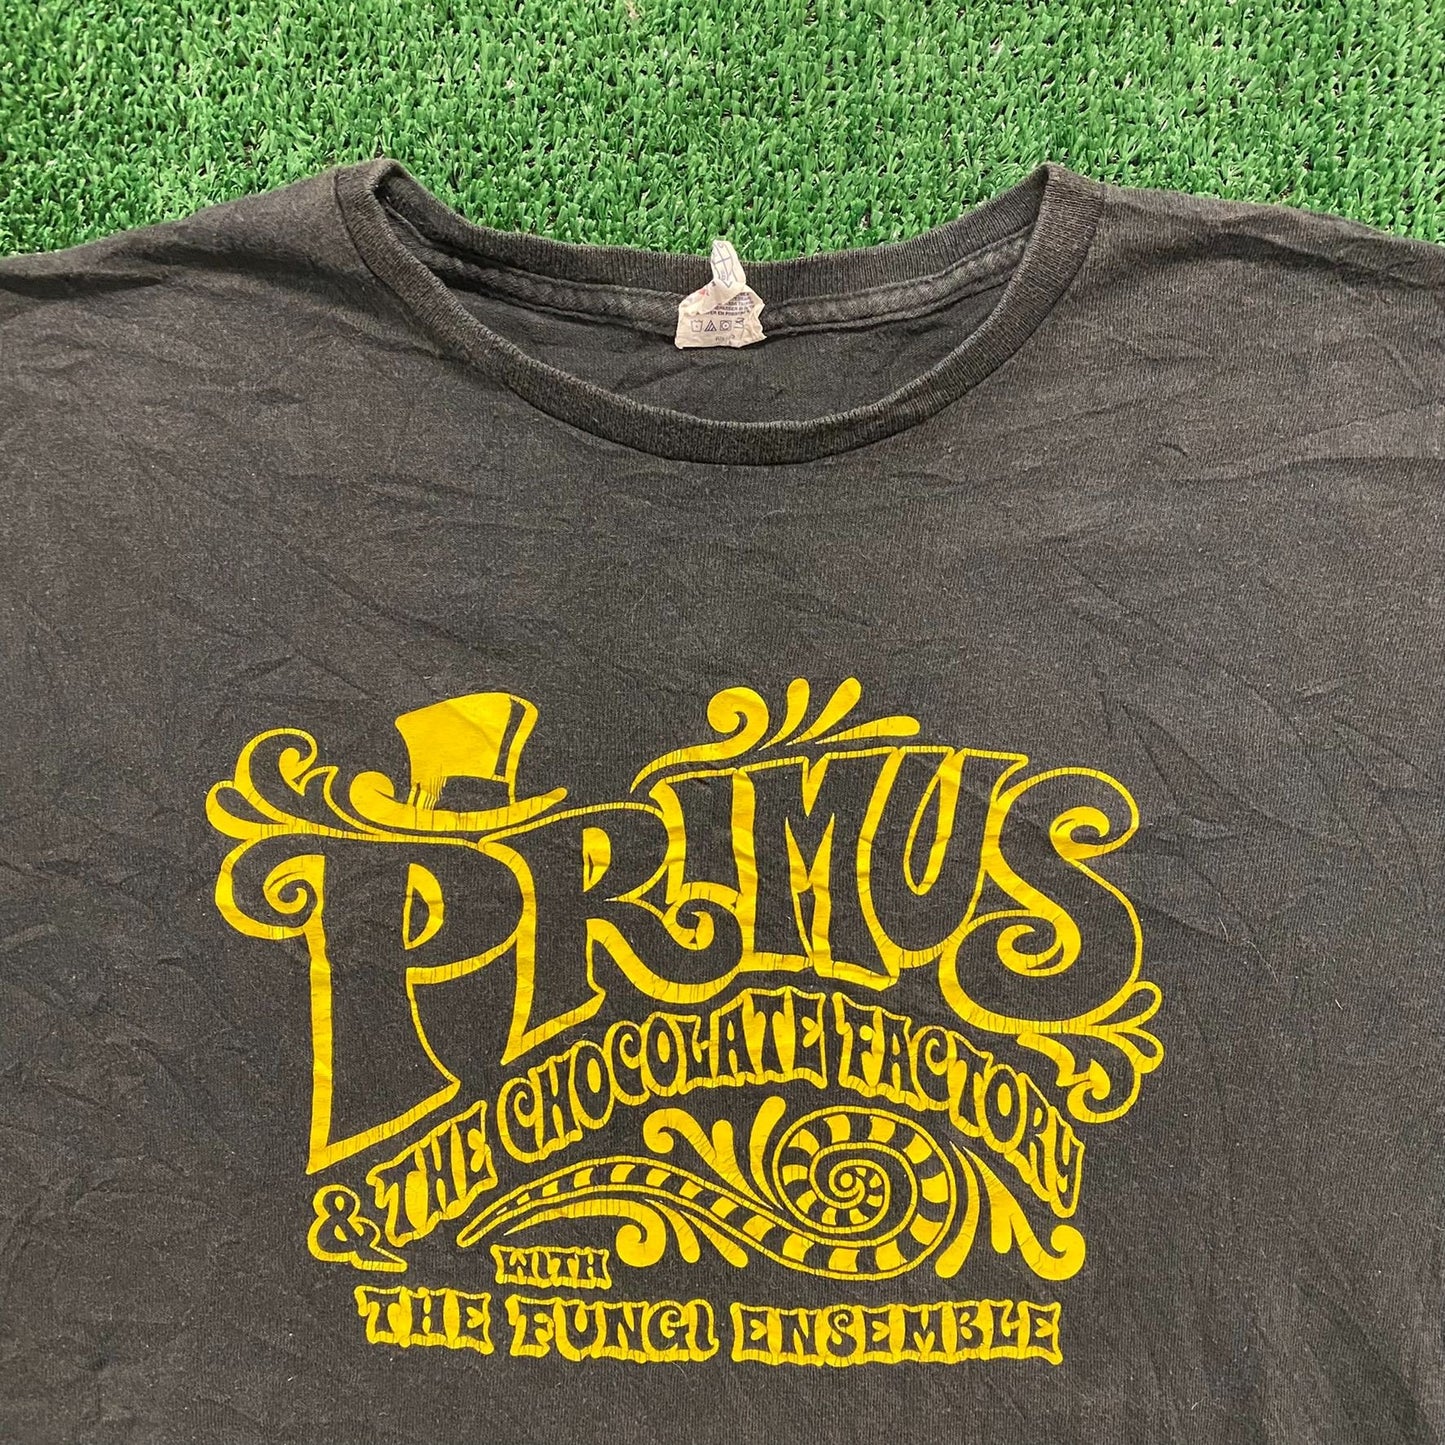 Primus Chocolate Factory Vintage Grunge Band T-Shirt